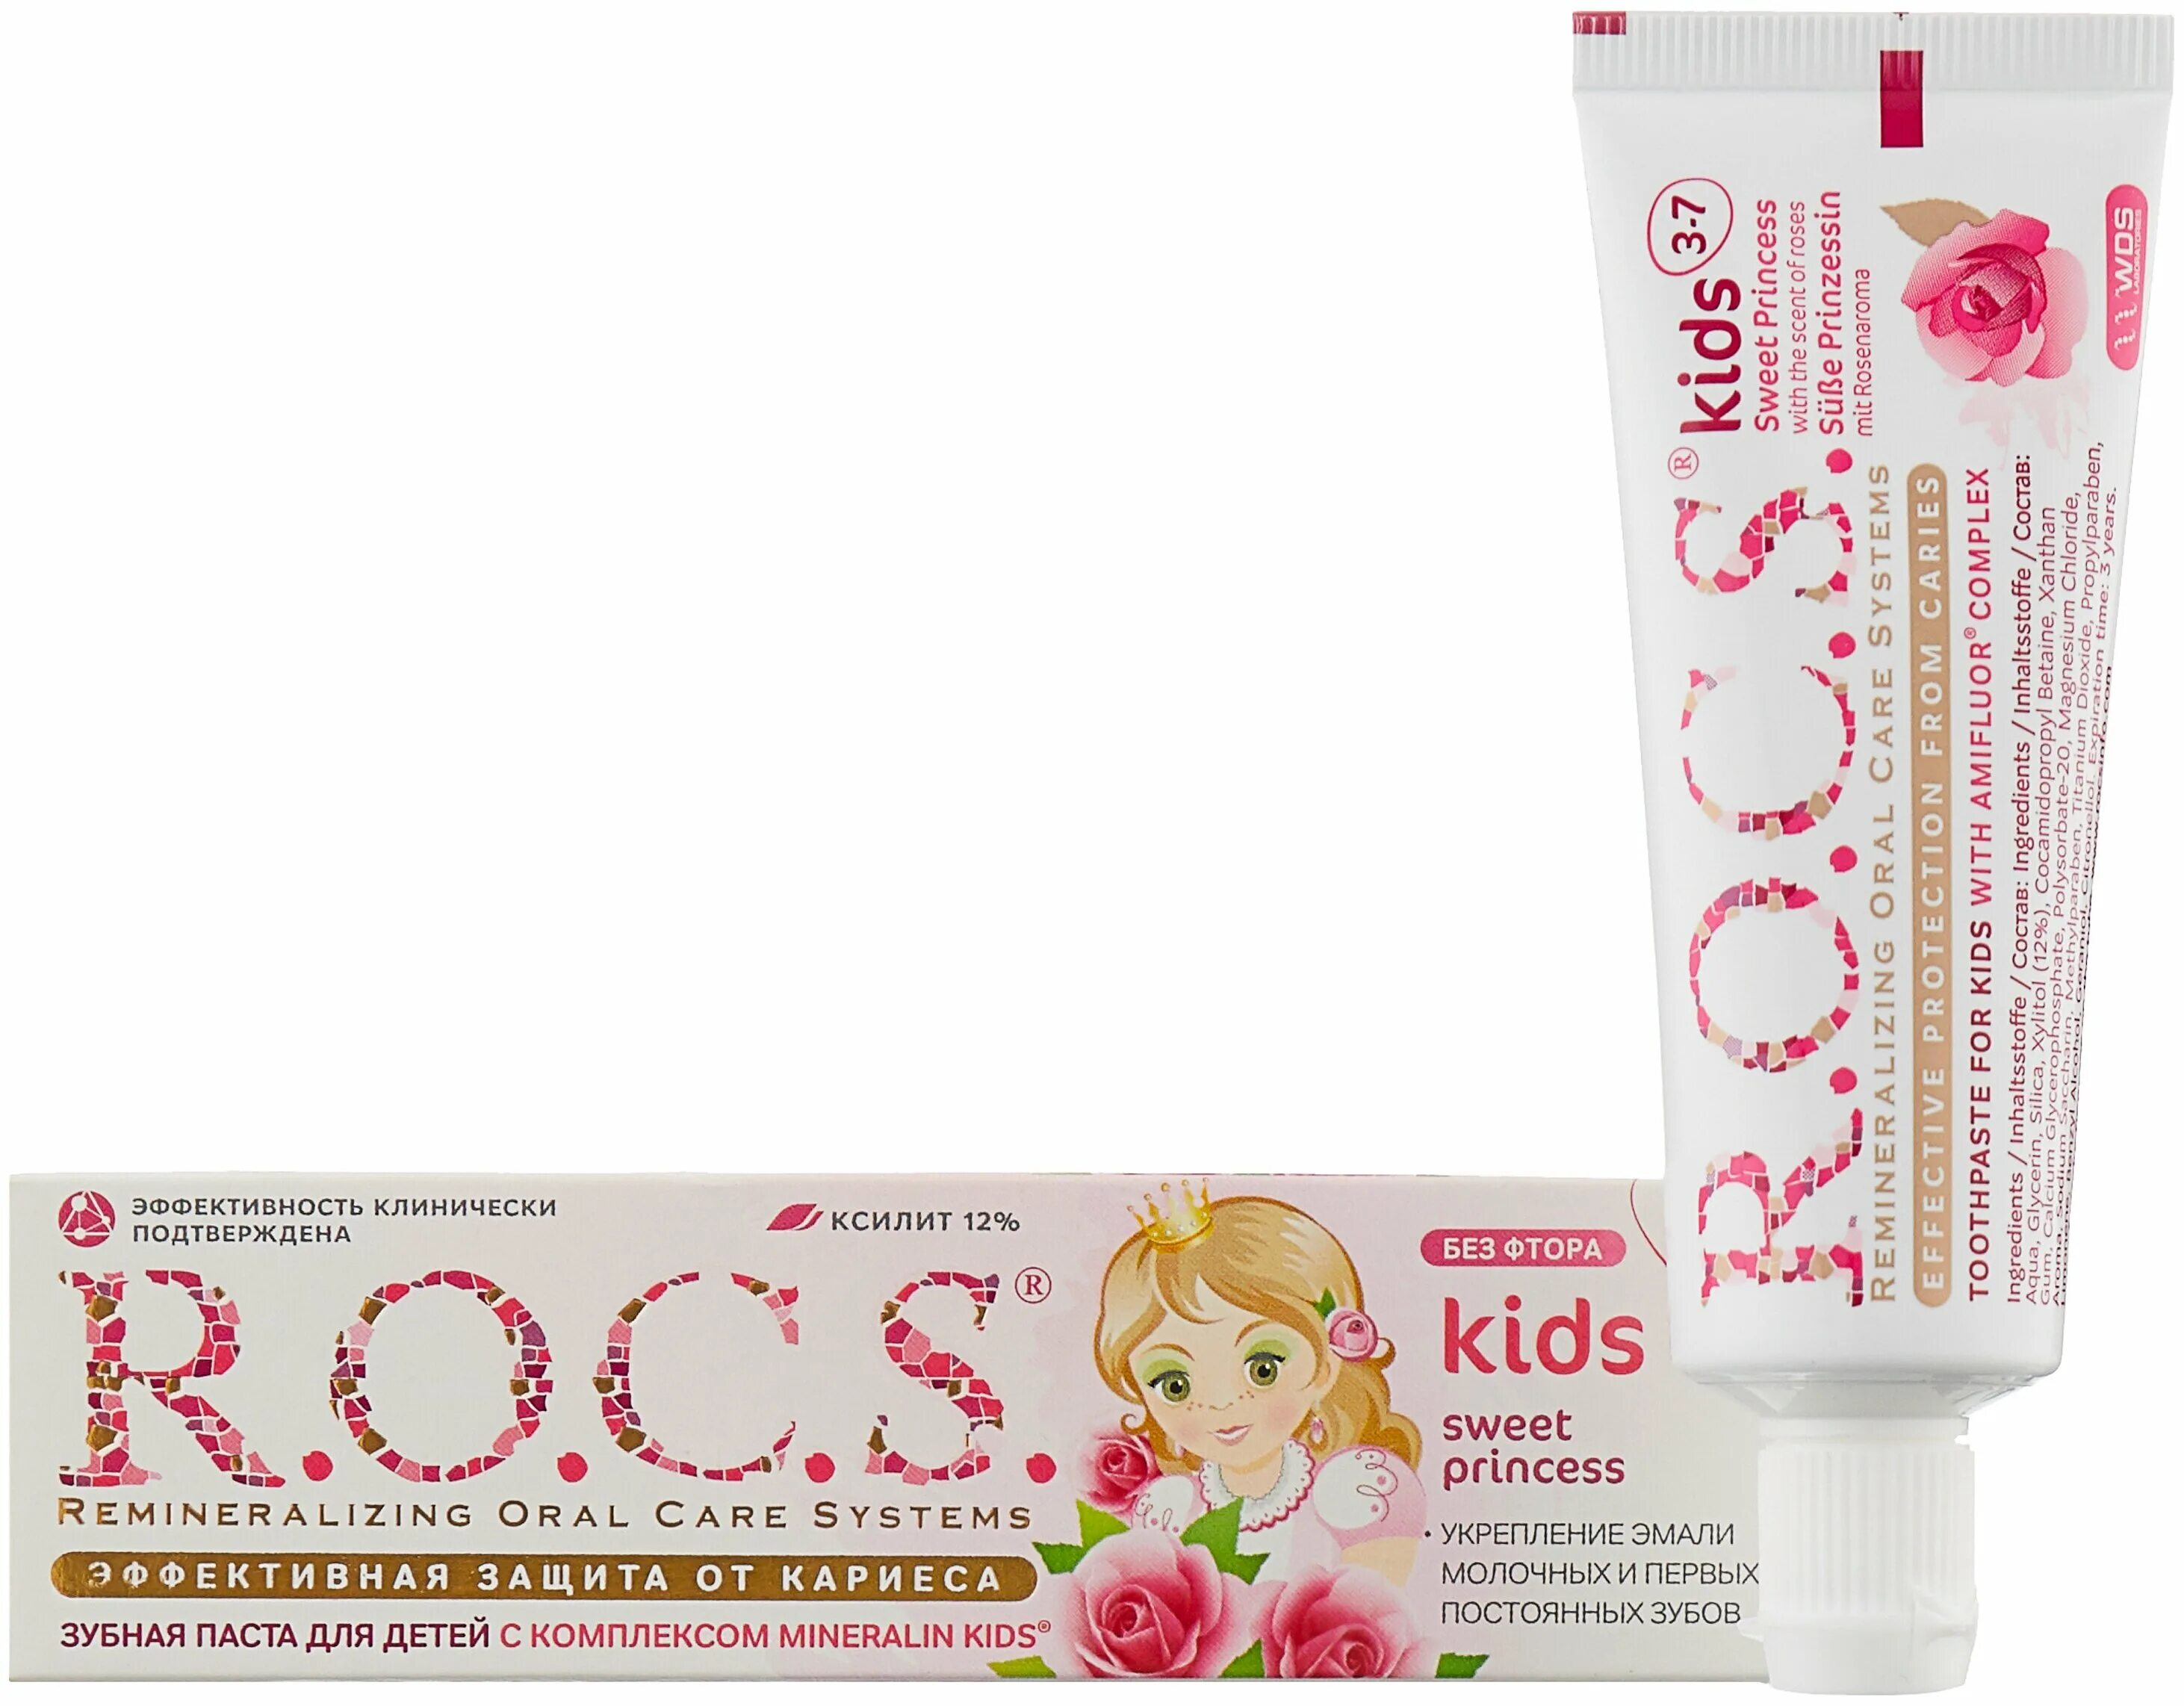 Паста рокс фтор. Детская паста Rocs 3-7. Rocs Kids зубная паста Sweet Princess. Детская паста с фтором 950 ppm зубная. Детские пасты Рокс ppm.